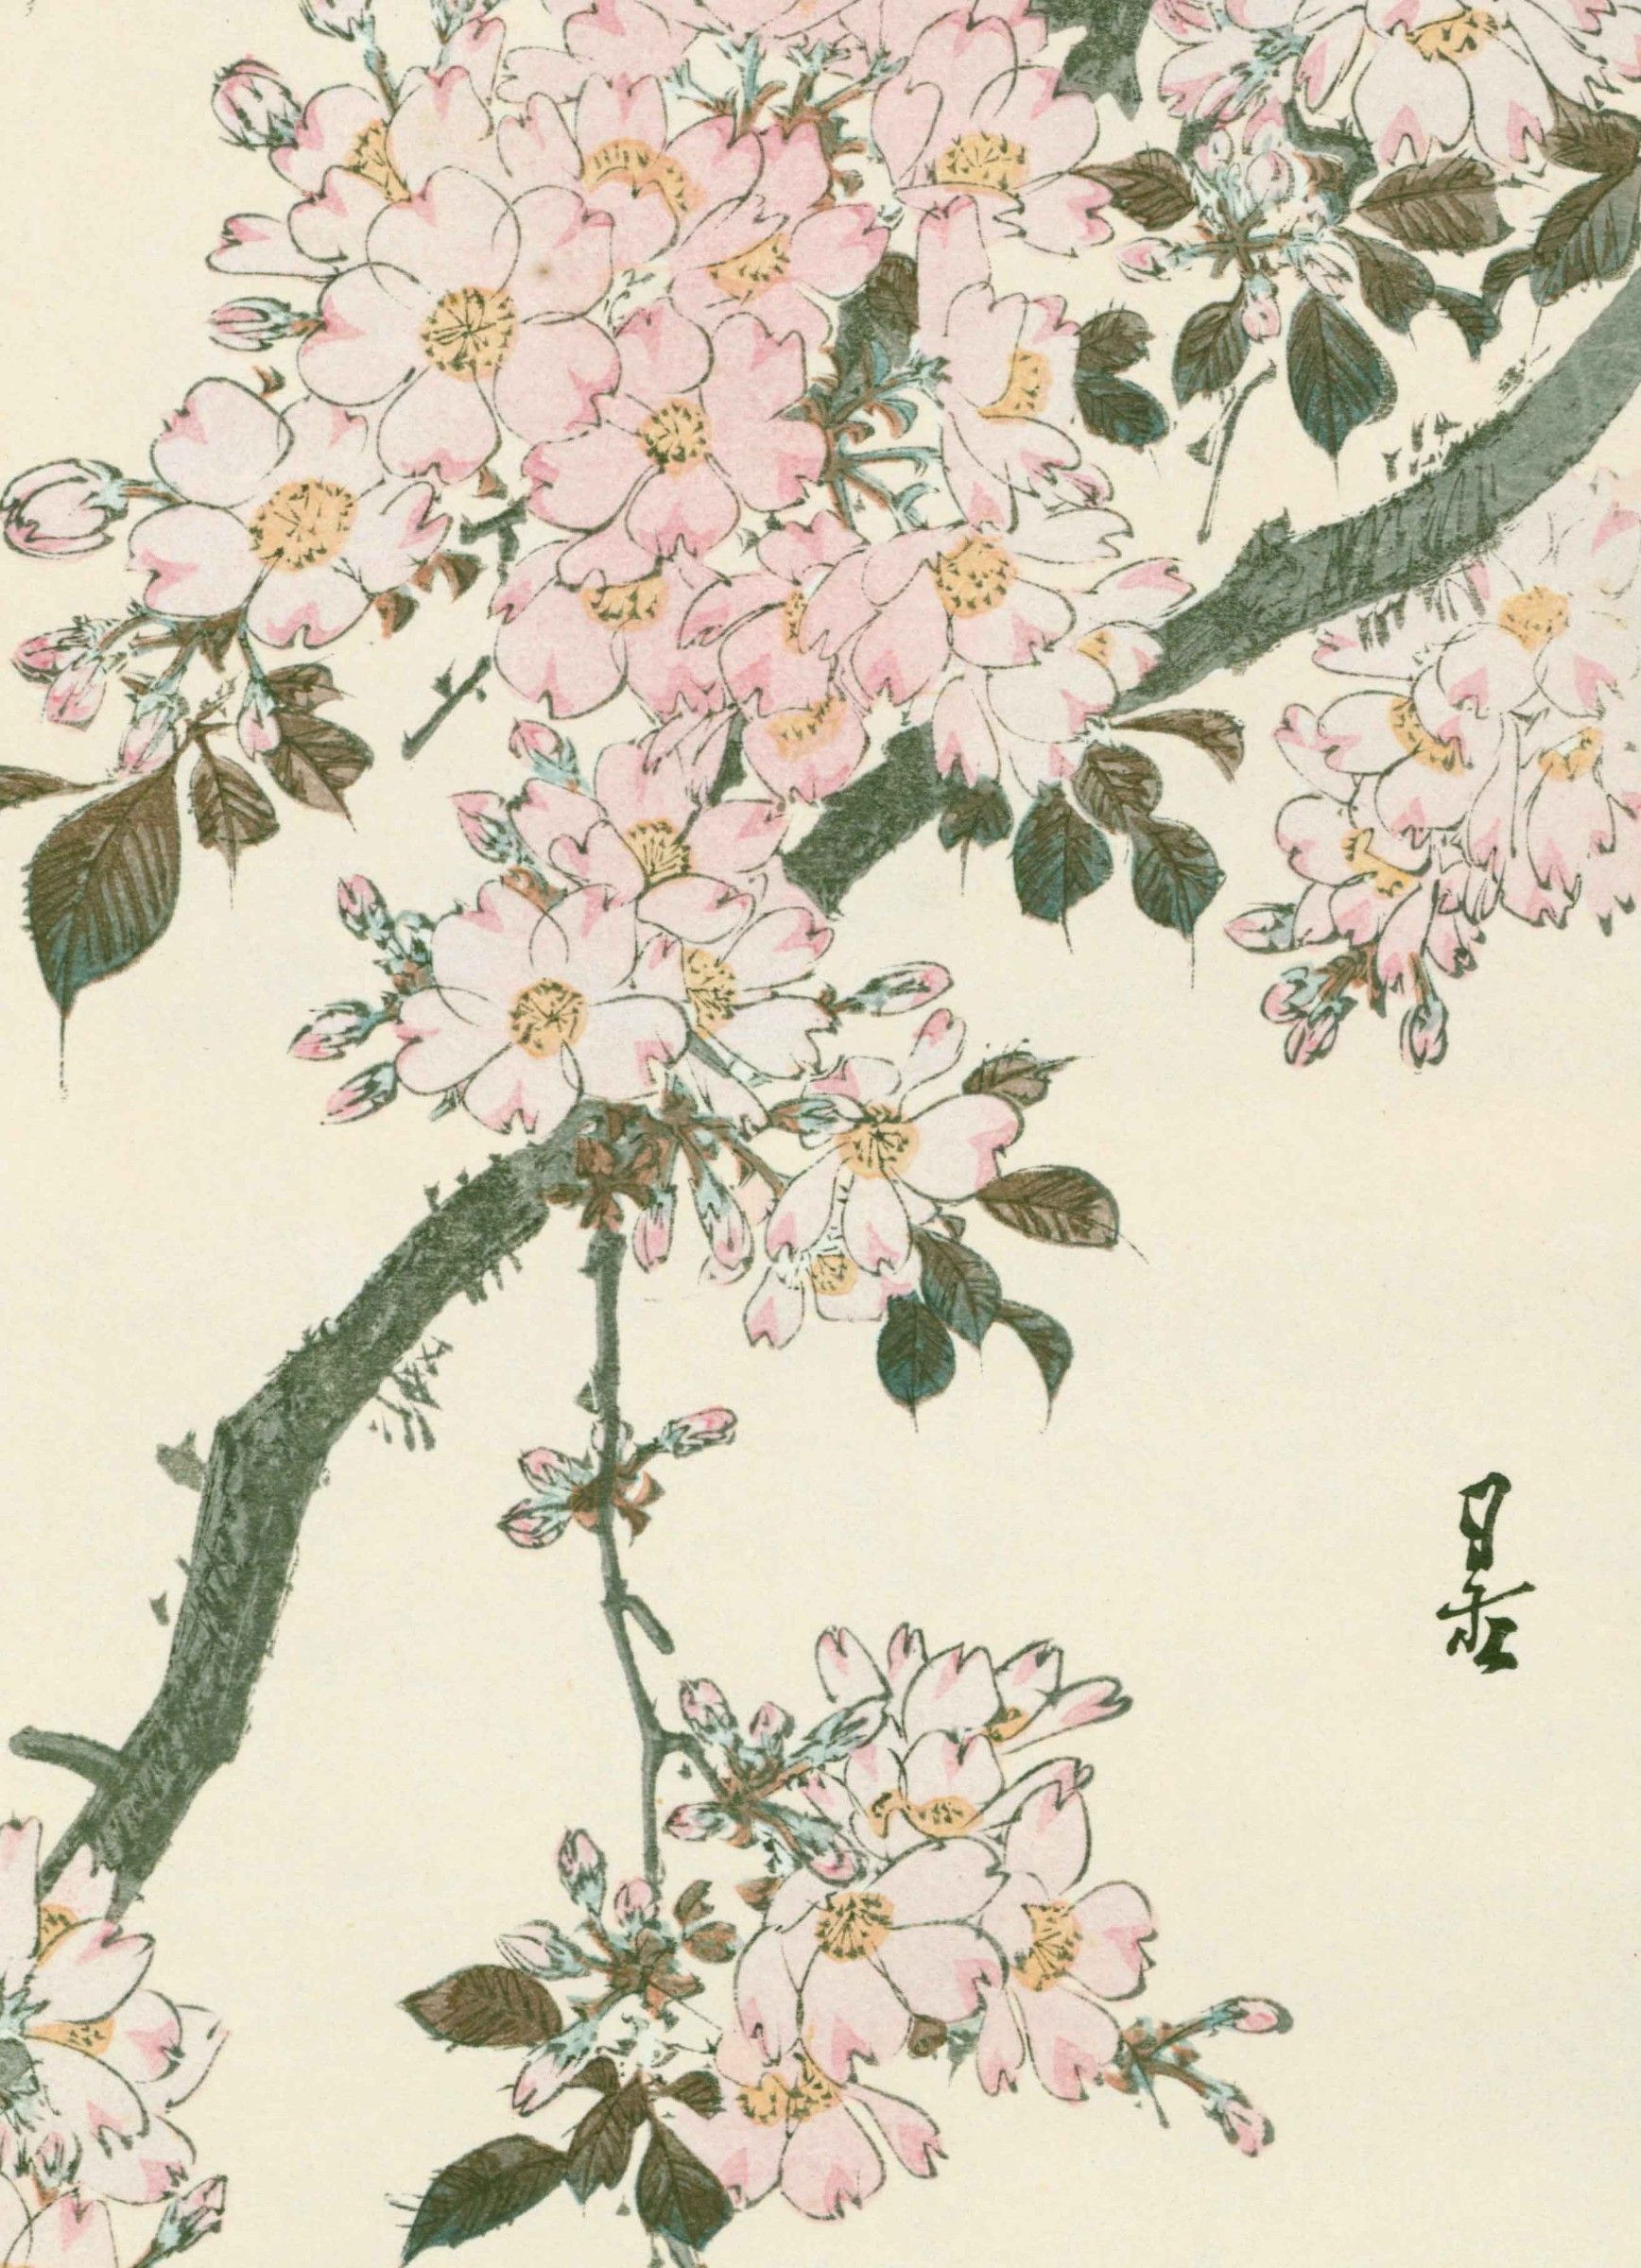 Yoshimoto Gesso Japanese Woodblock Print - Cherry Blossoms